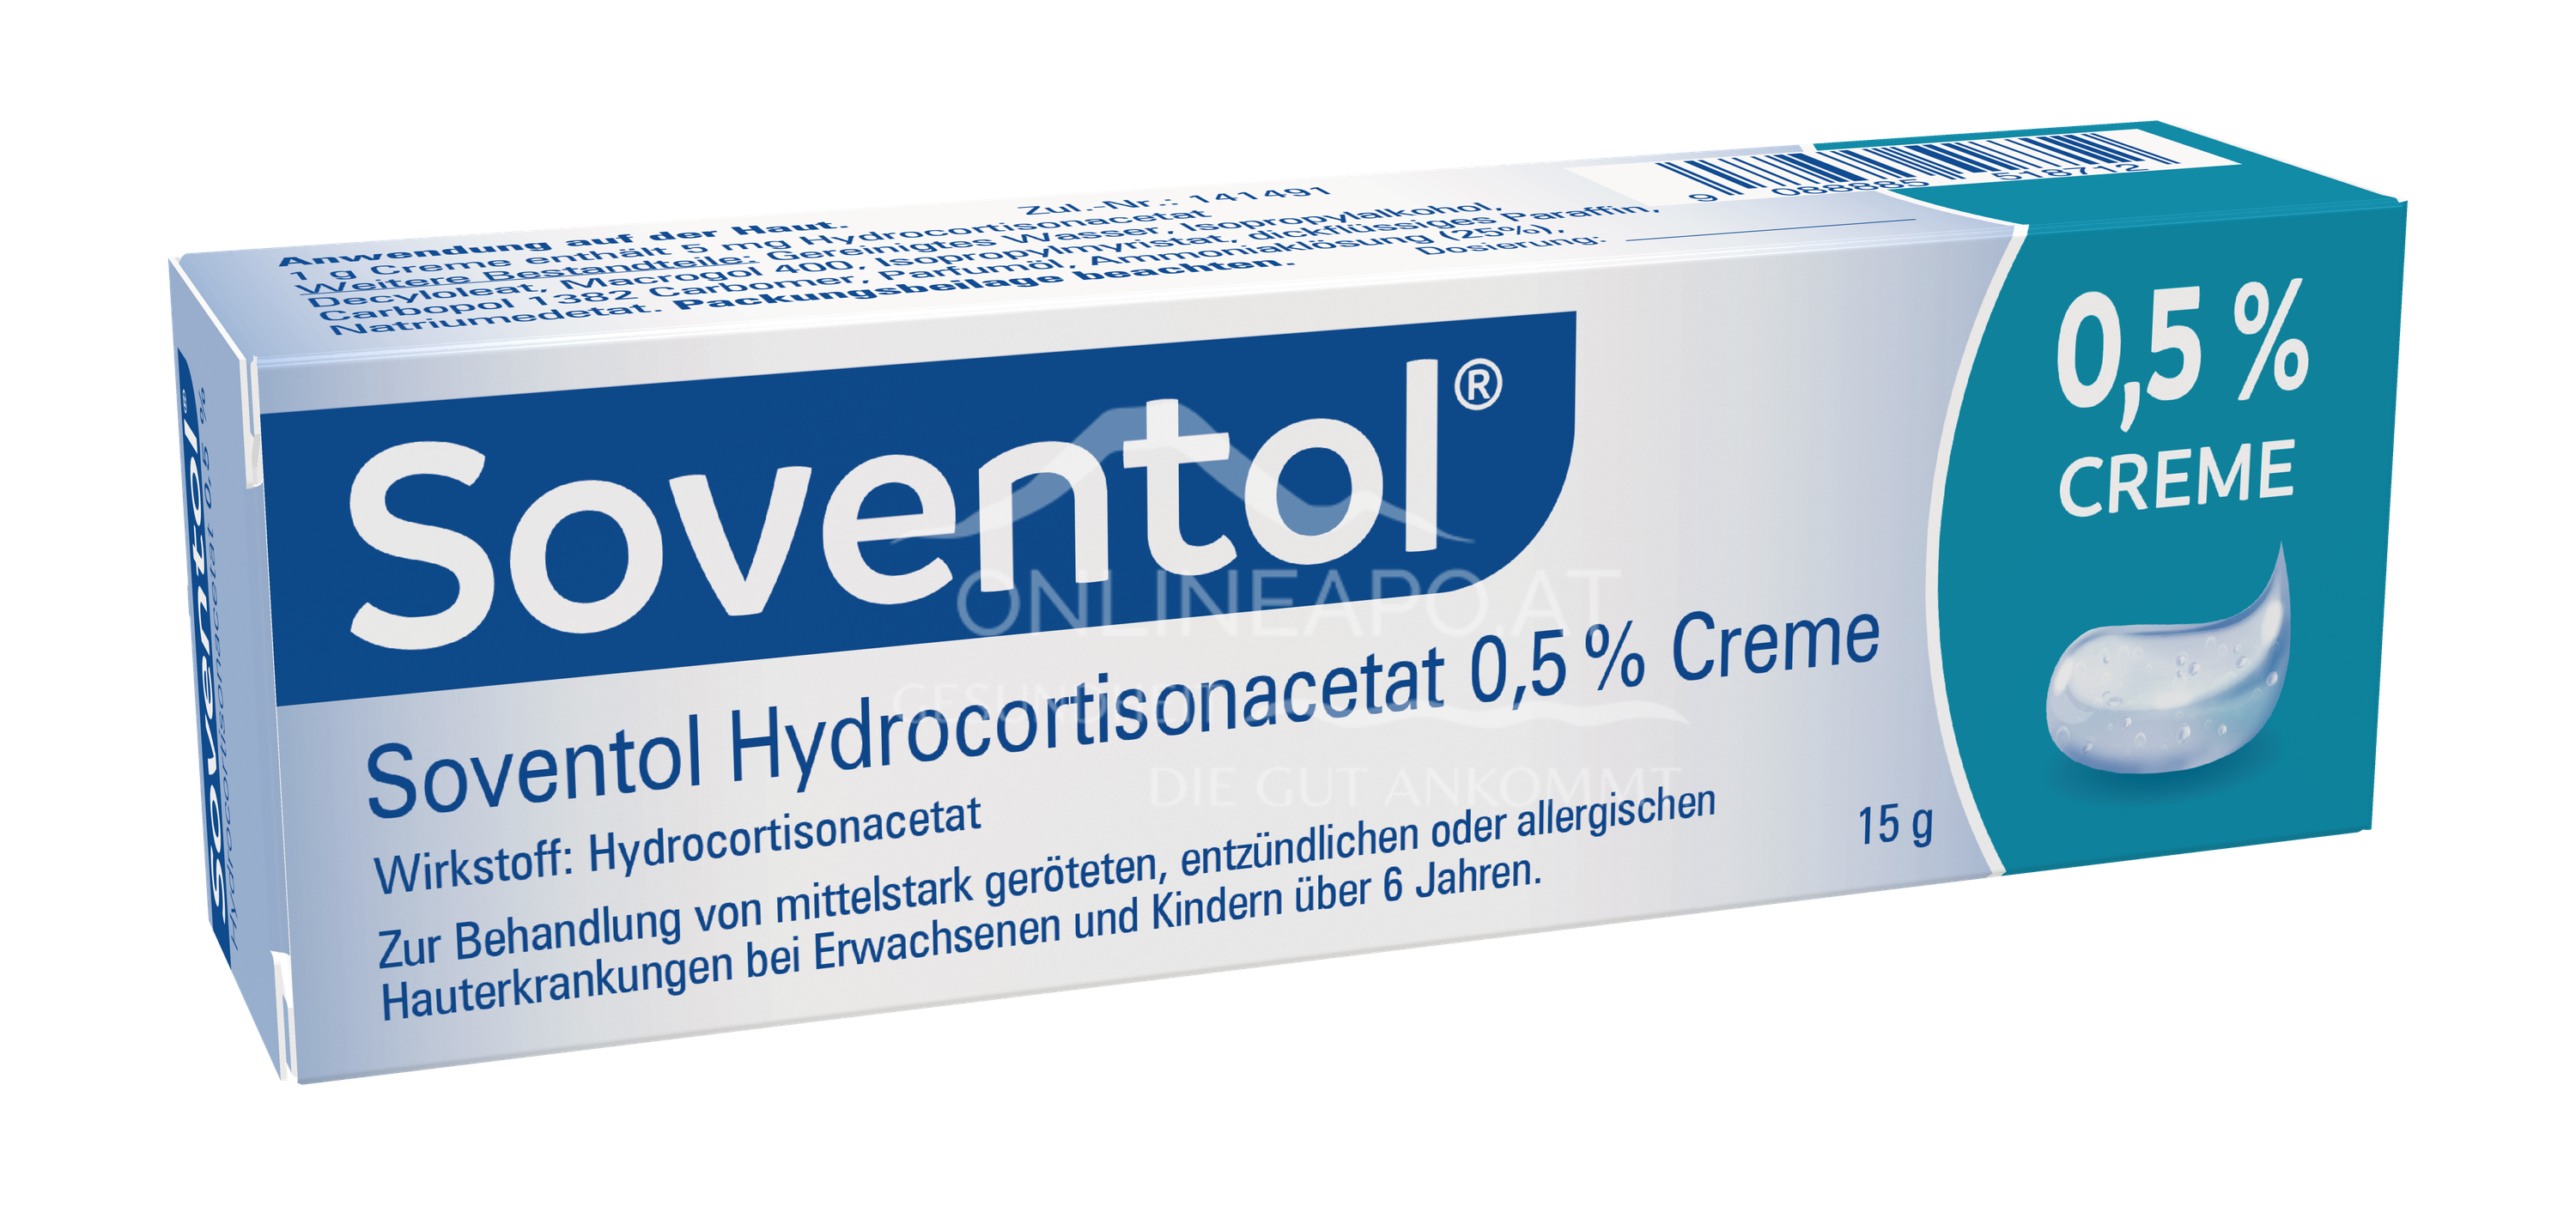 Soventol Hydrocortisonacetat 0,5 % Creme